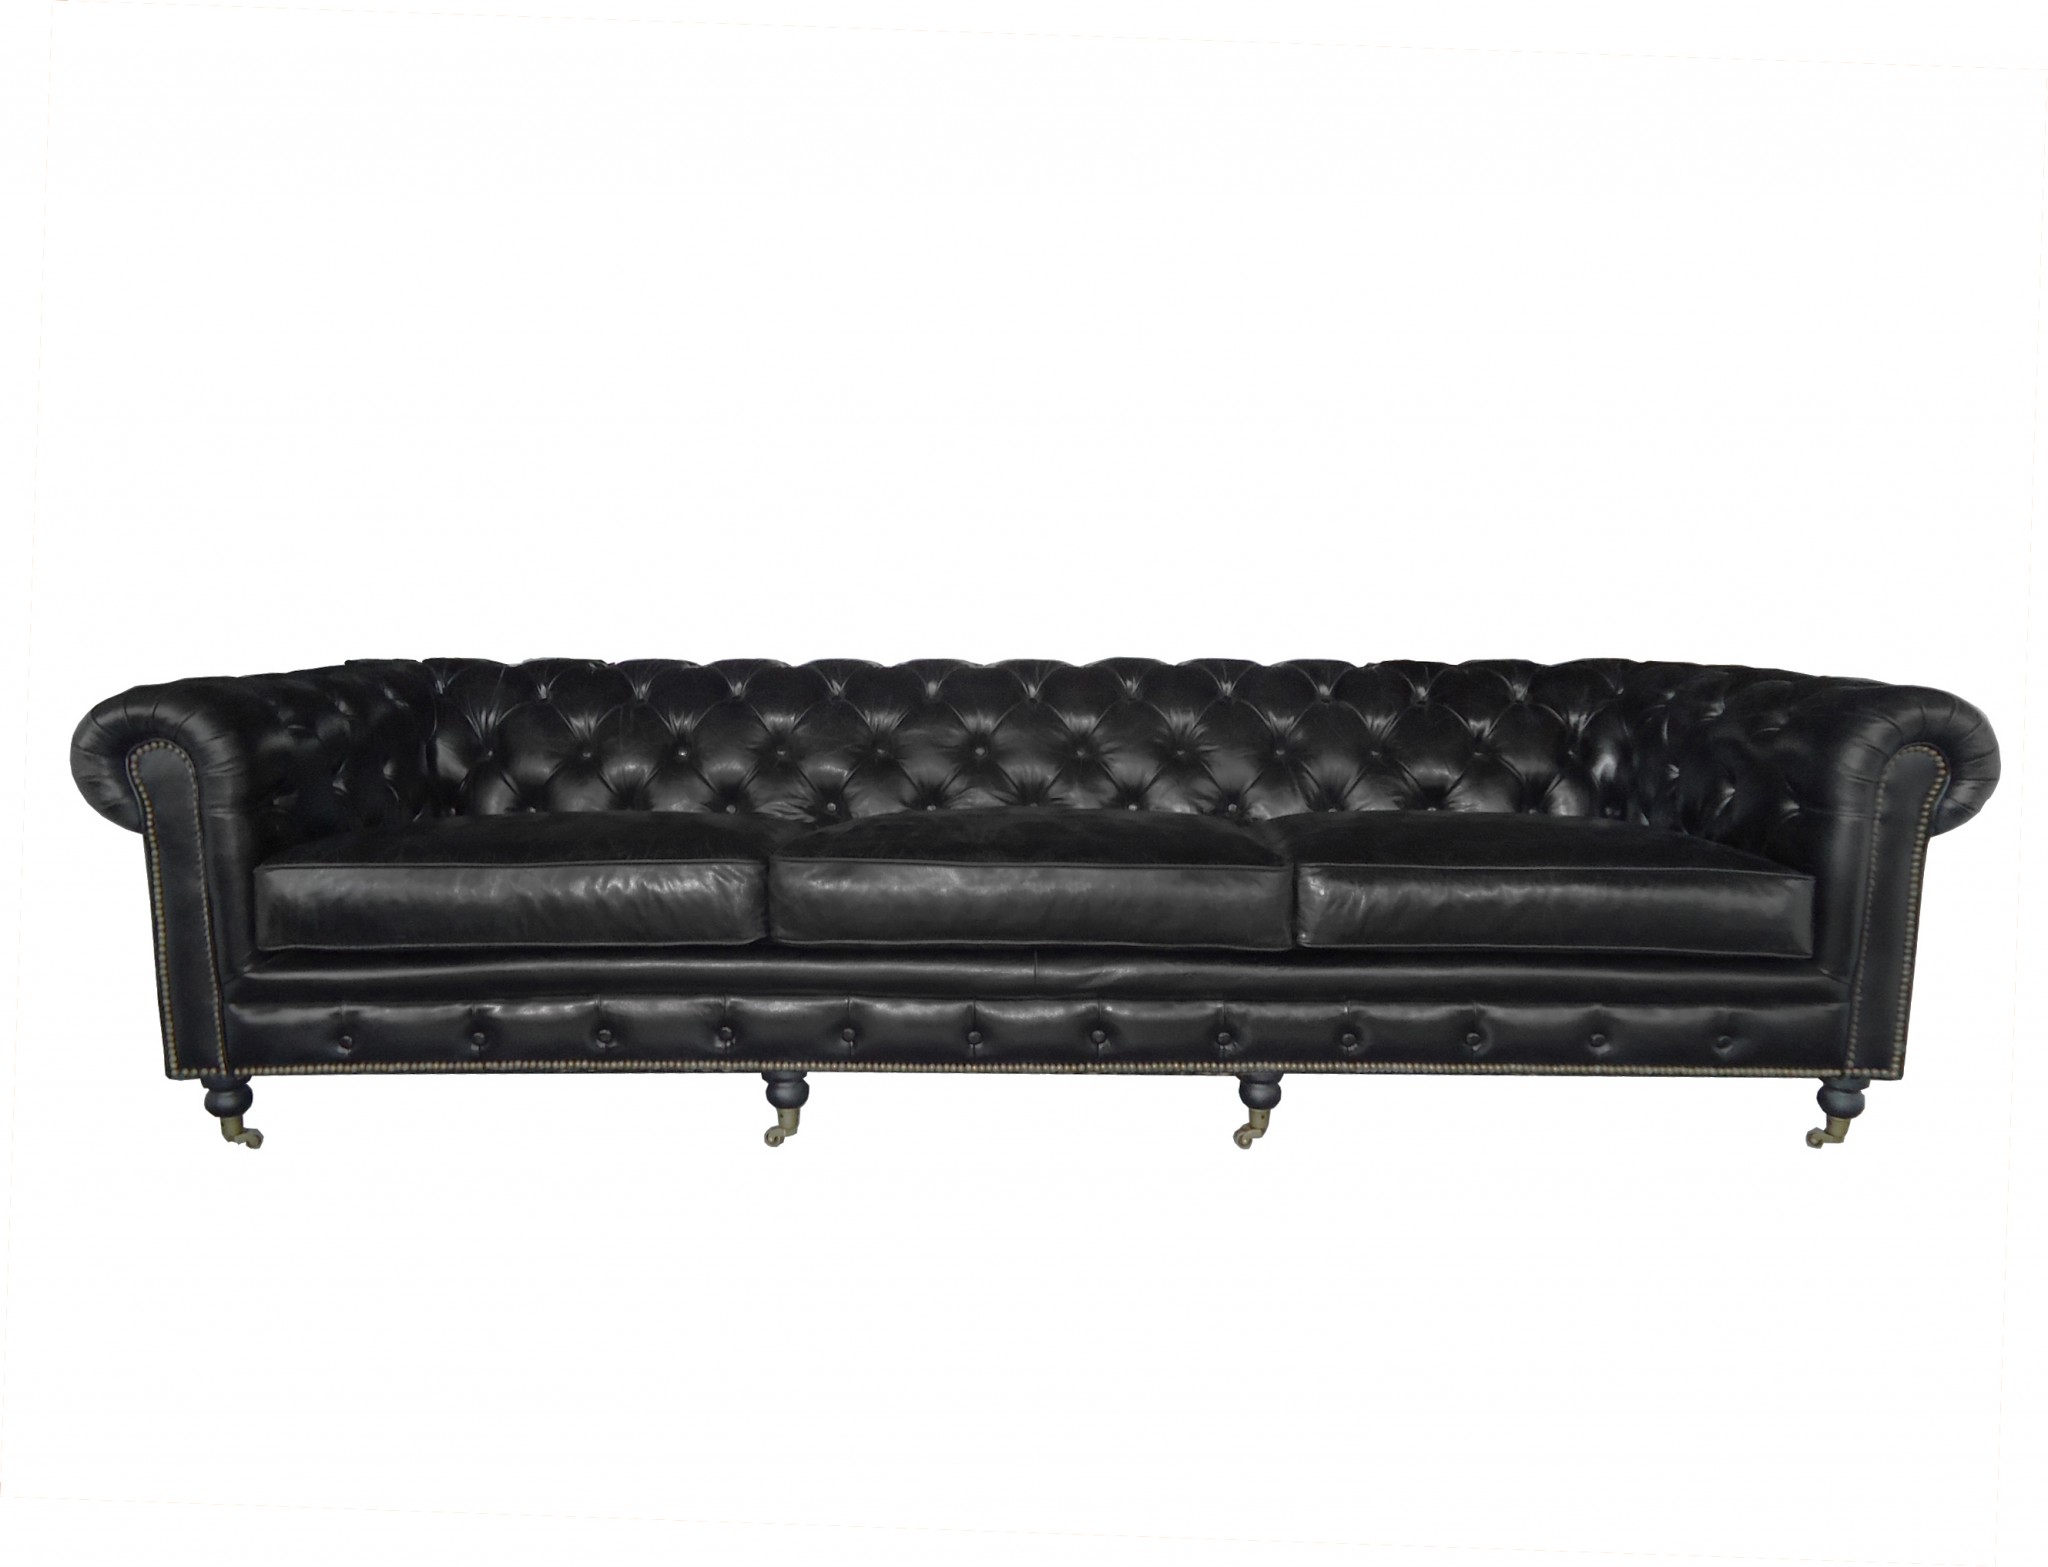 36" X 118" X 30" Black Leather Sofa 4 Places